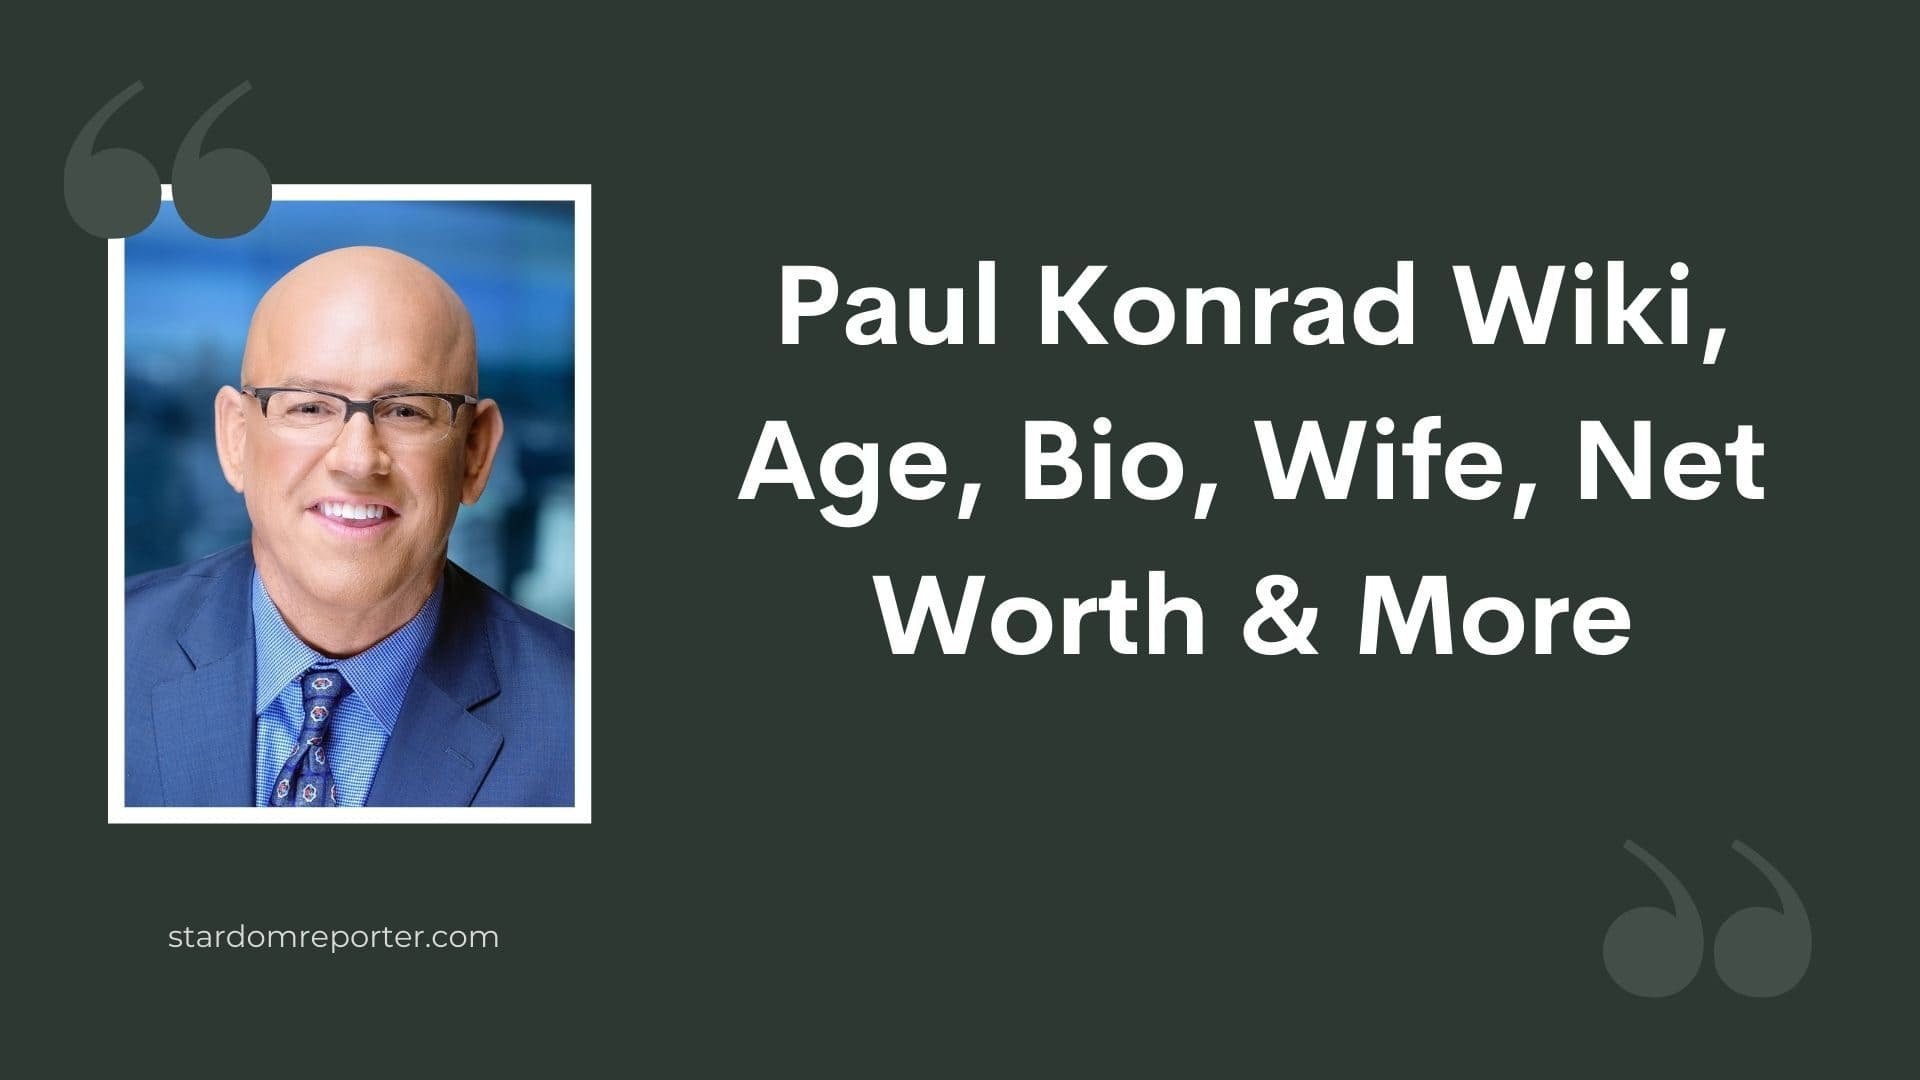 Paul Konrad Wiki, Age, Bio, Wife, Net Worth & More - 49